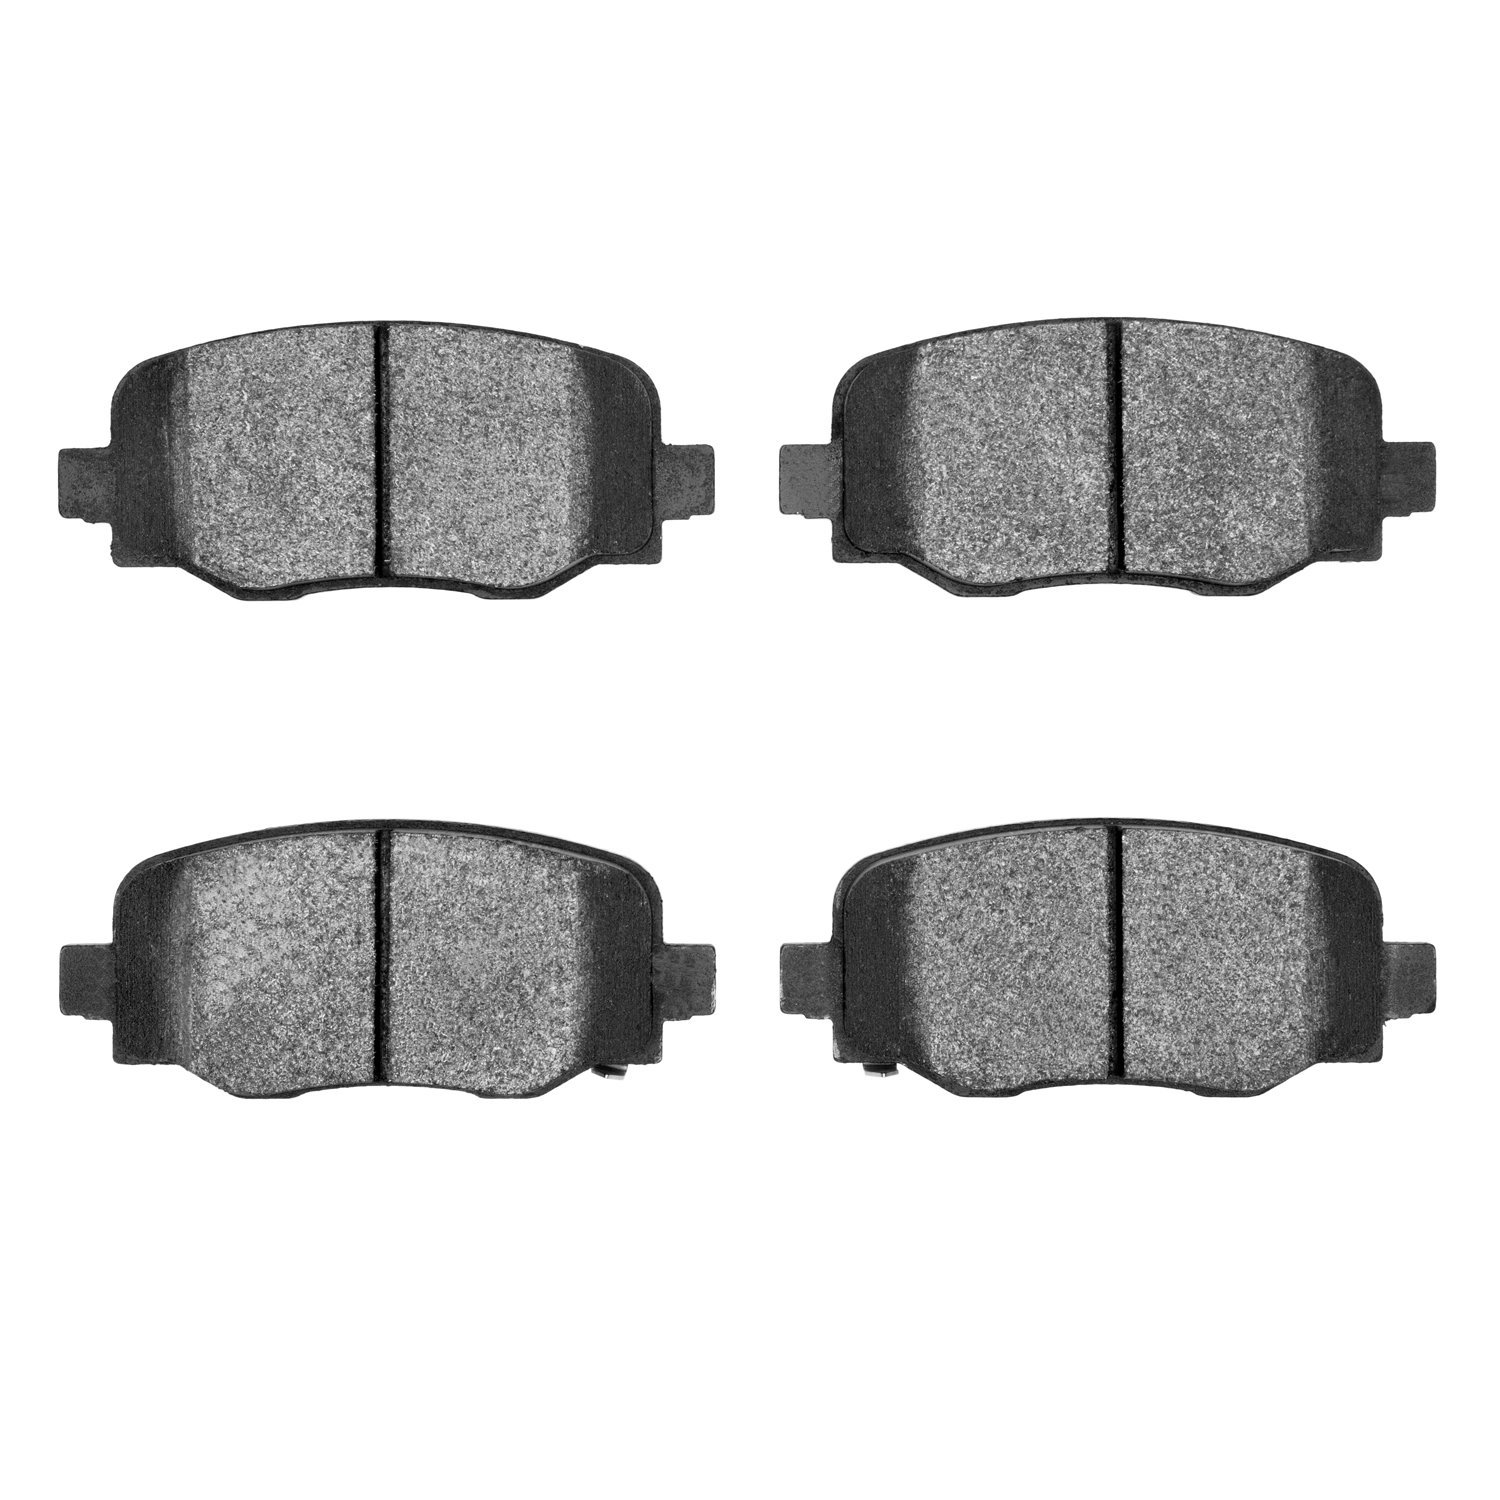 1551-1809-00 5000 Advanced Ceramic Brake Pads, Fits Select Mopar, Position: Rear